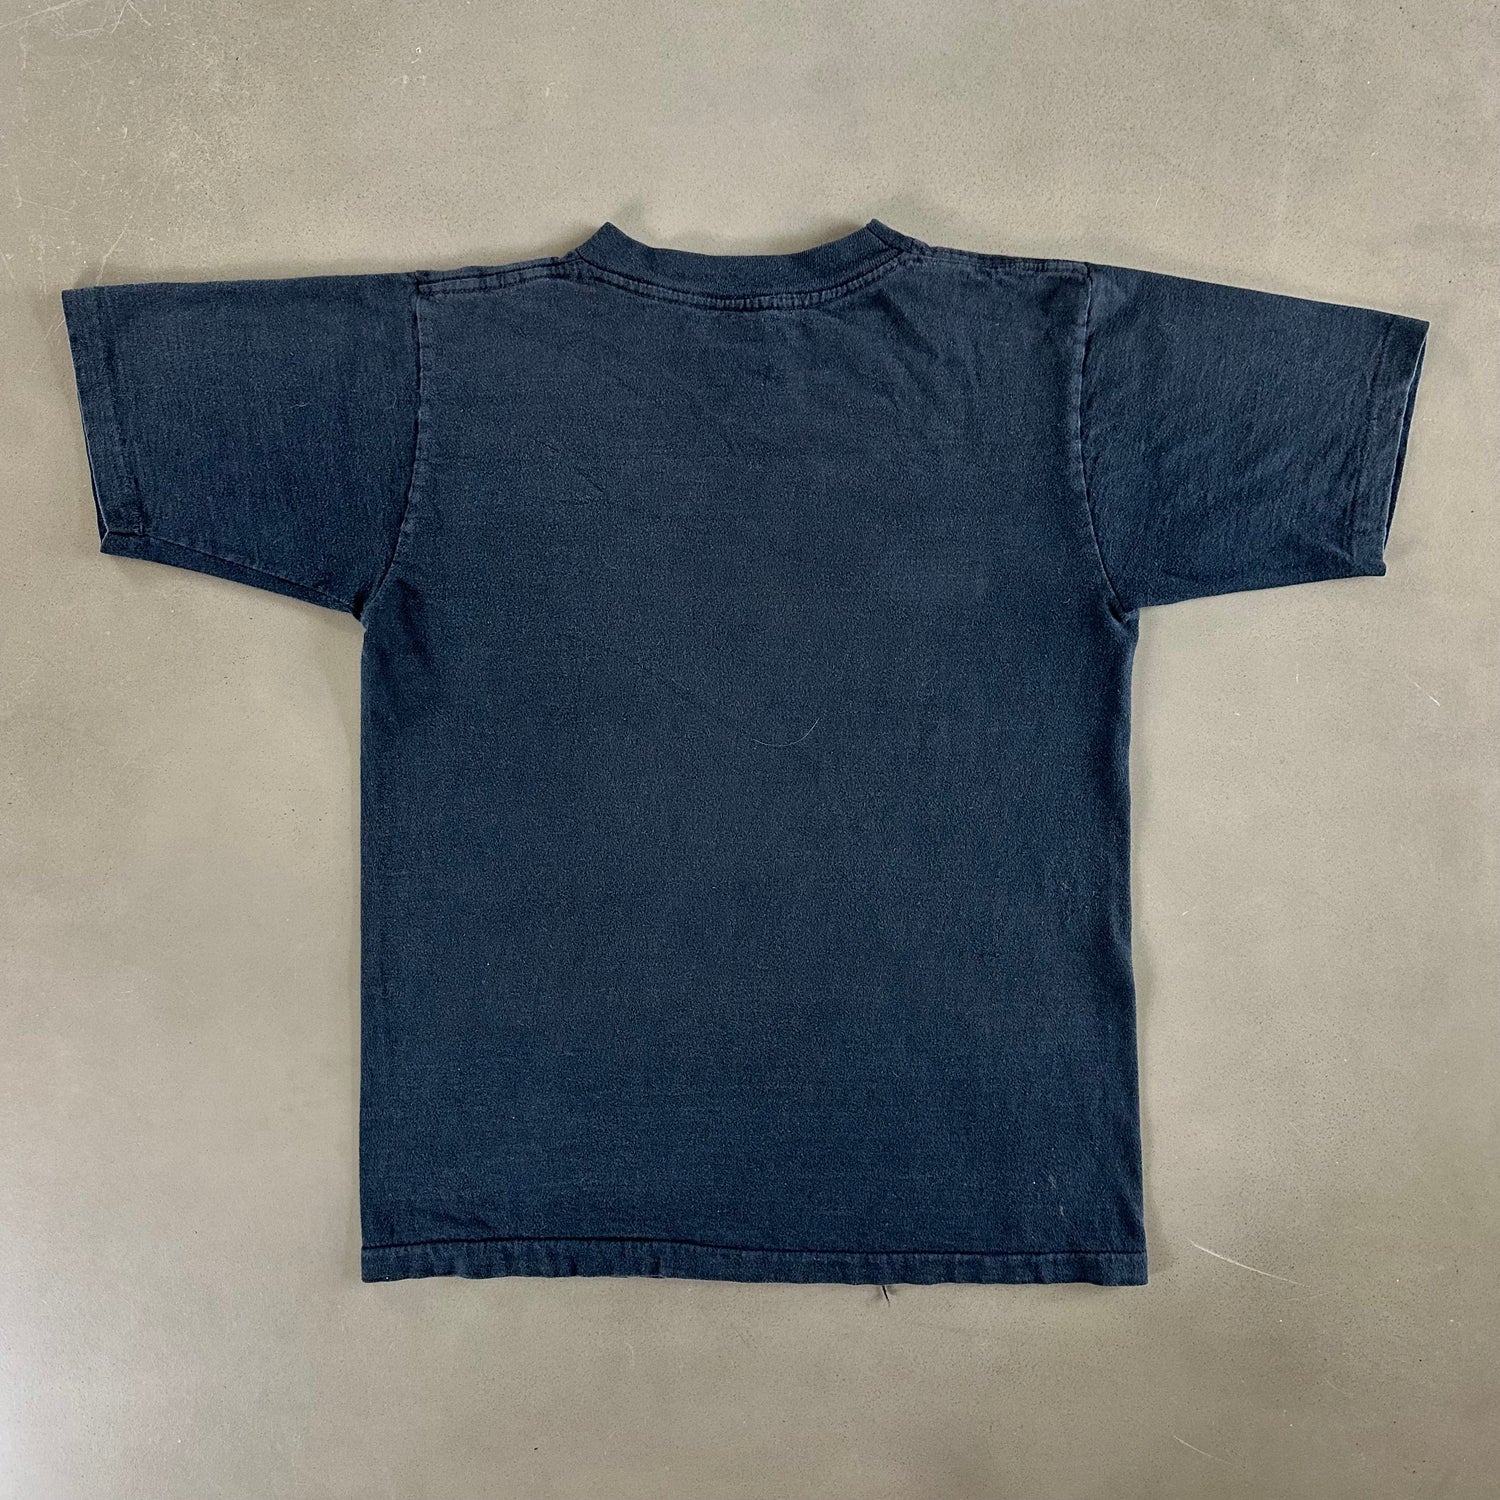 Vintage 1990s Sea World T-shirt size Large